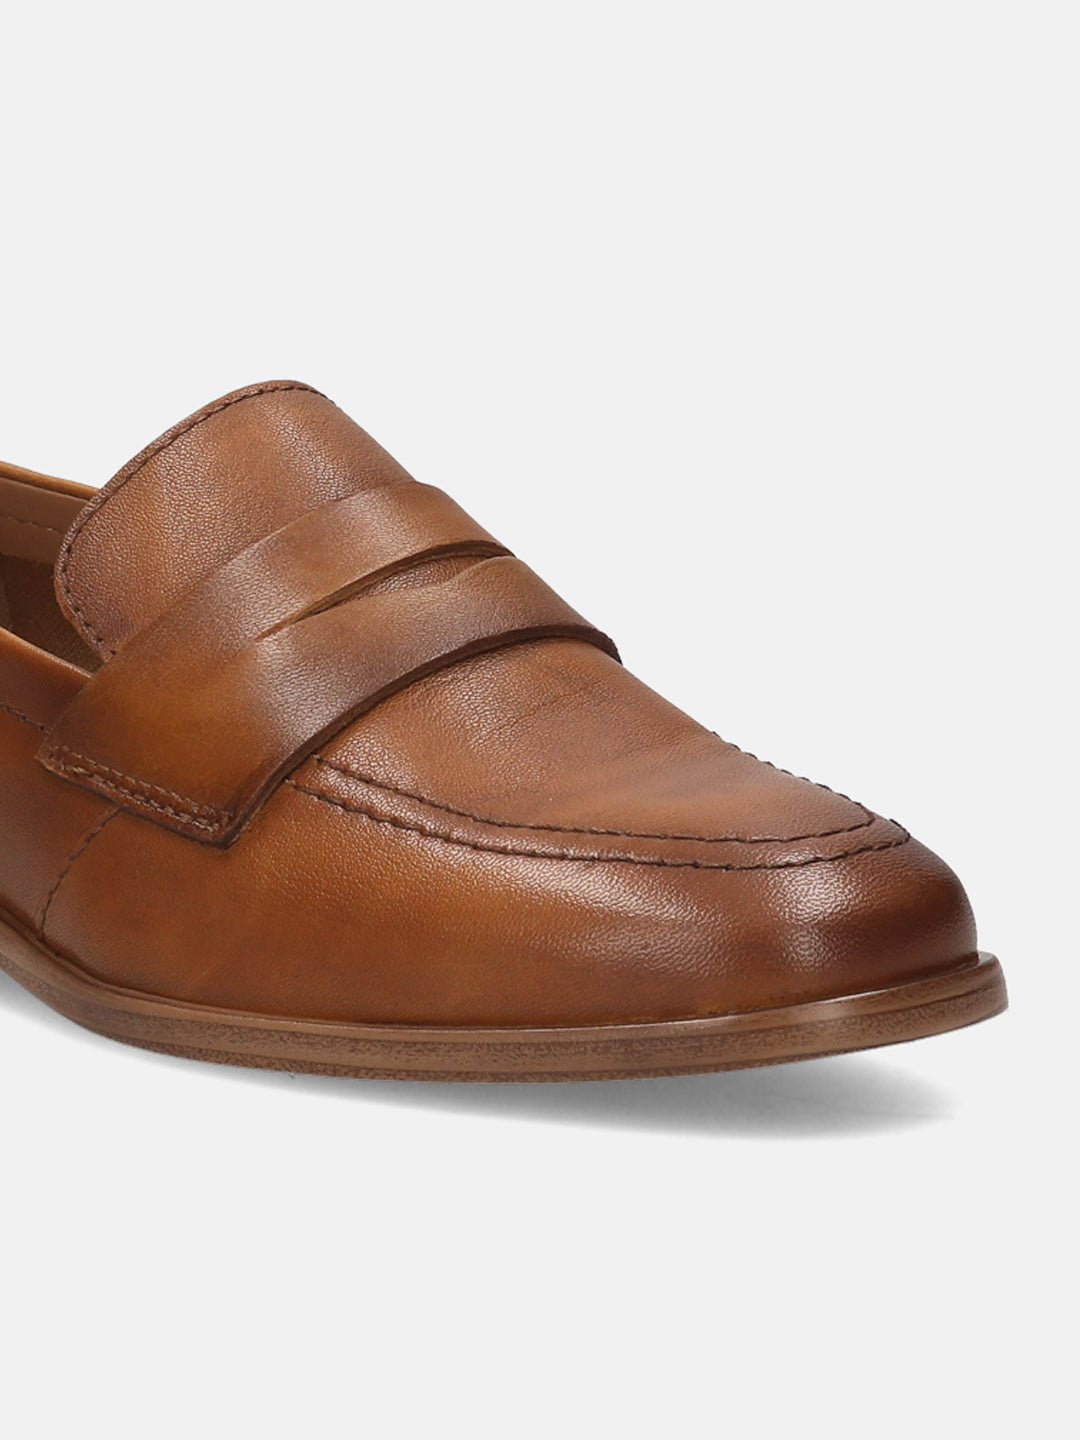 Rosalie Cognac Leather Loafers